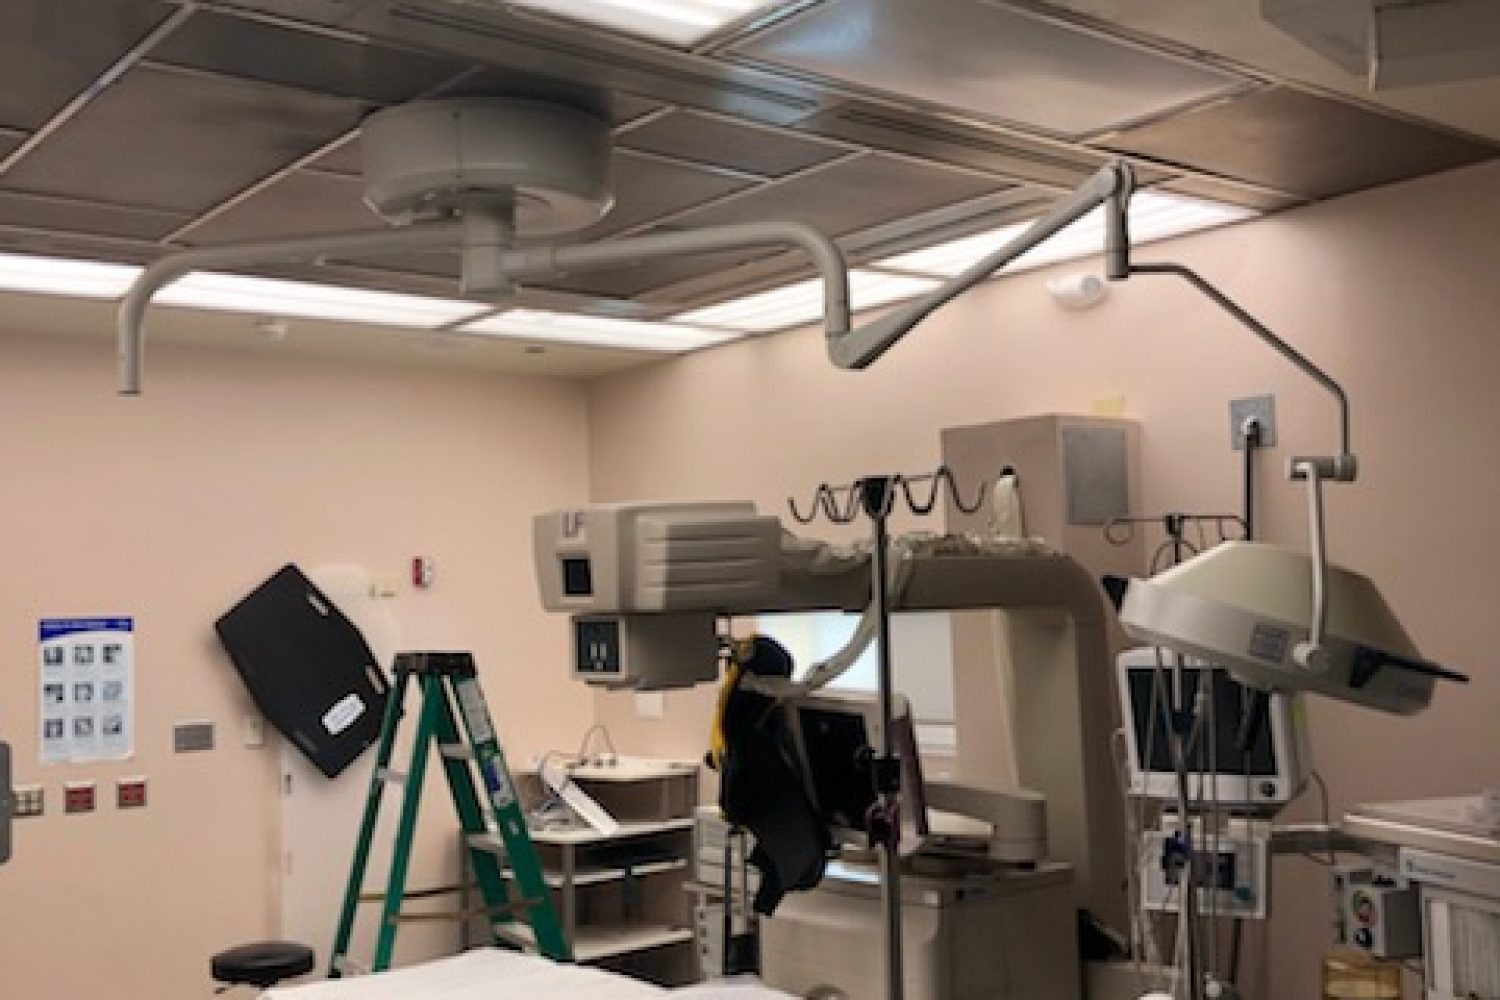 2 Room, 2 Berchtold Flat Panel Upgrade at McLeod Regional Medical Center